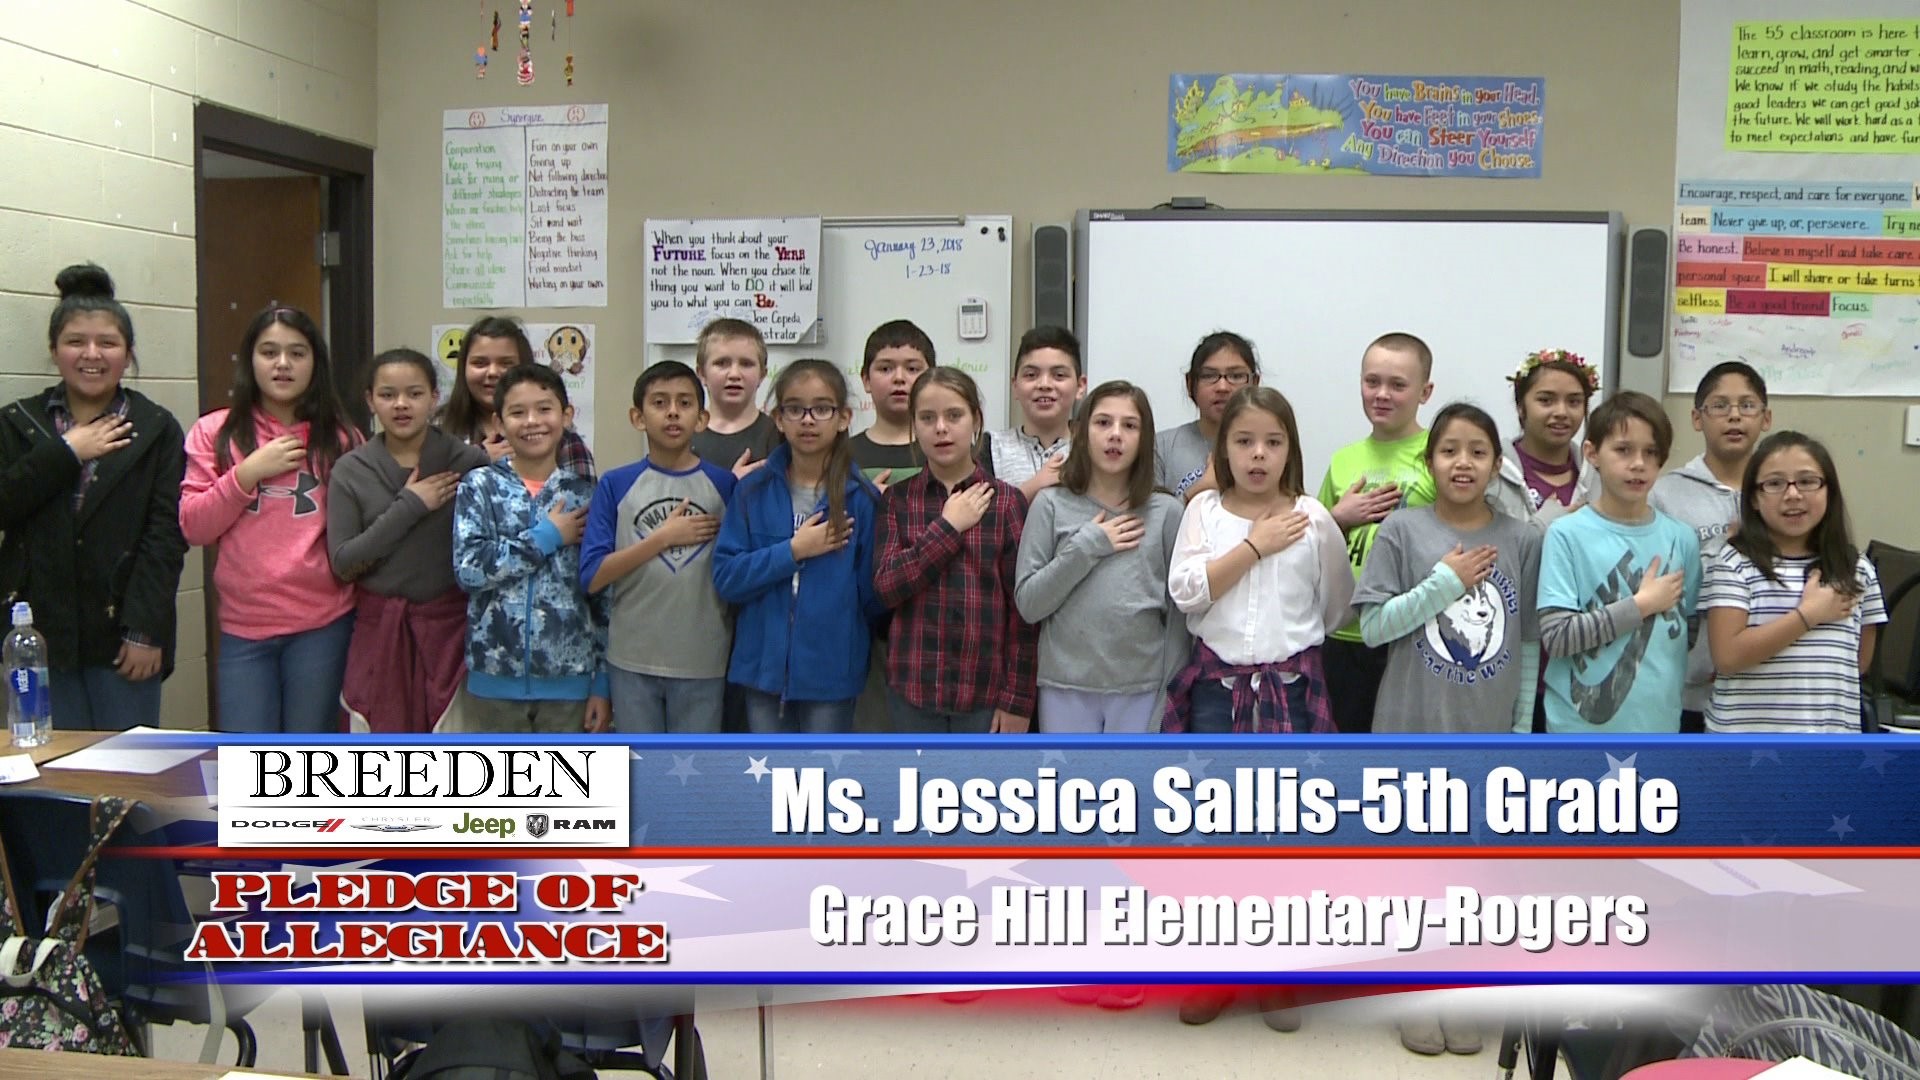 Ms. Jessica Sallis  5th Grade  Grace Hill Elementary  Rogers